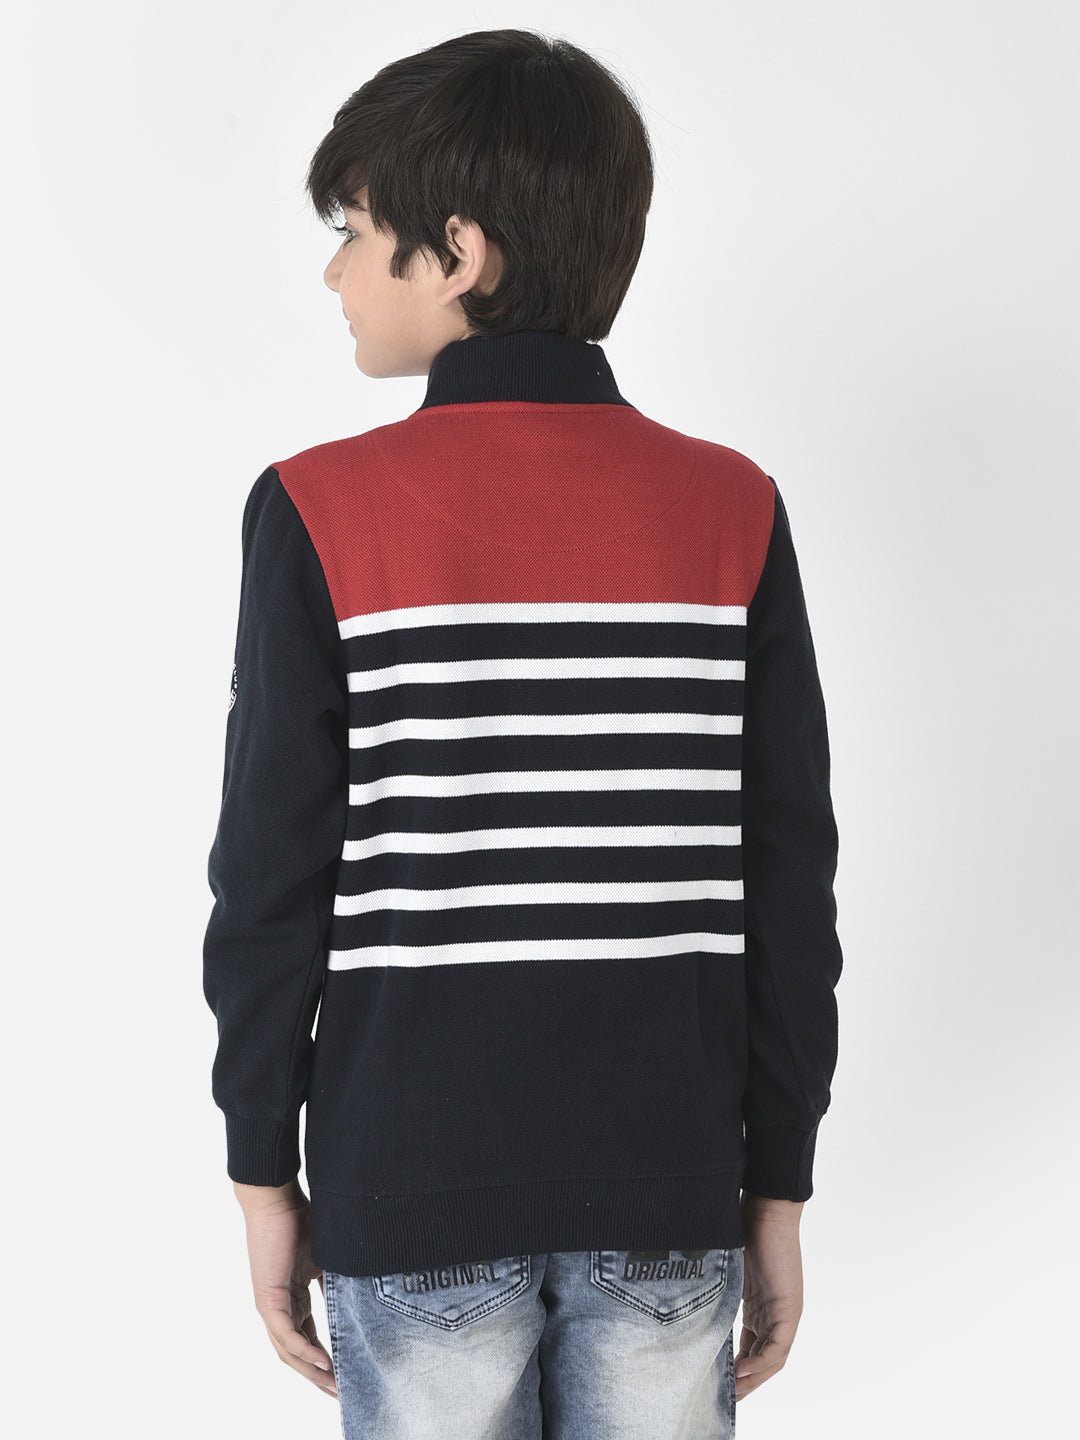  Half-Zipped Red Stripe Sweatshirt 